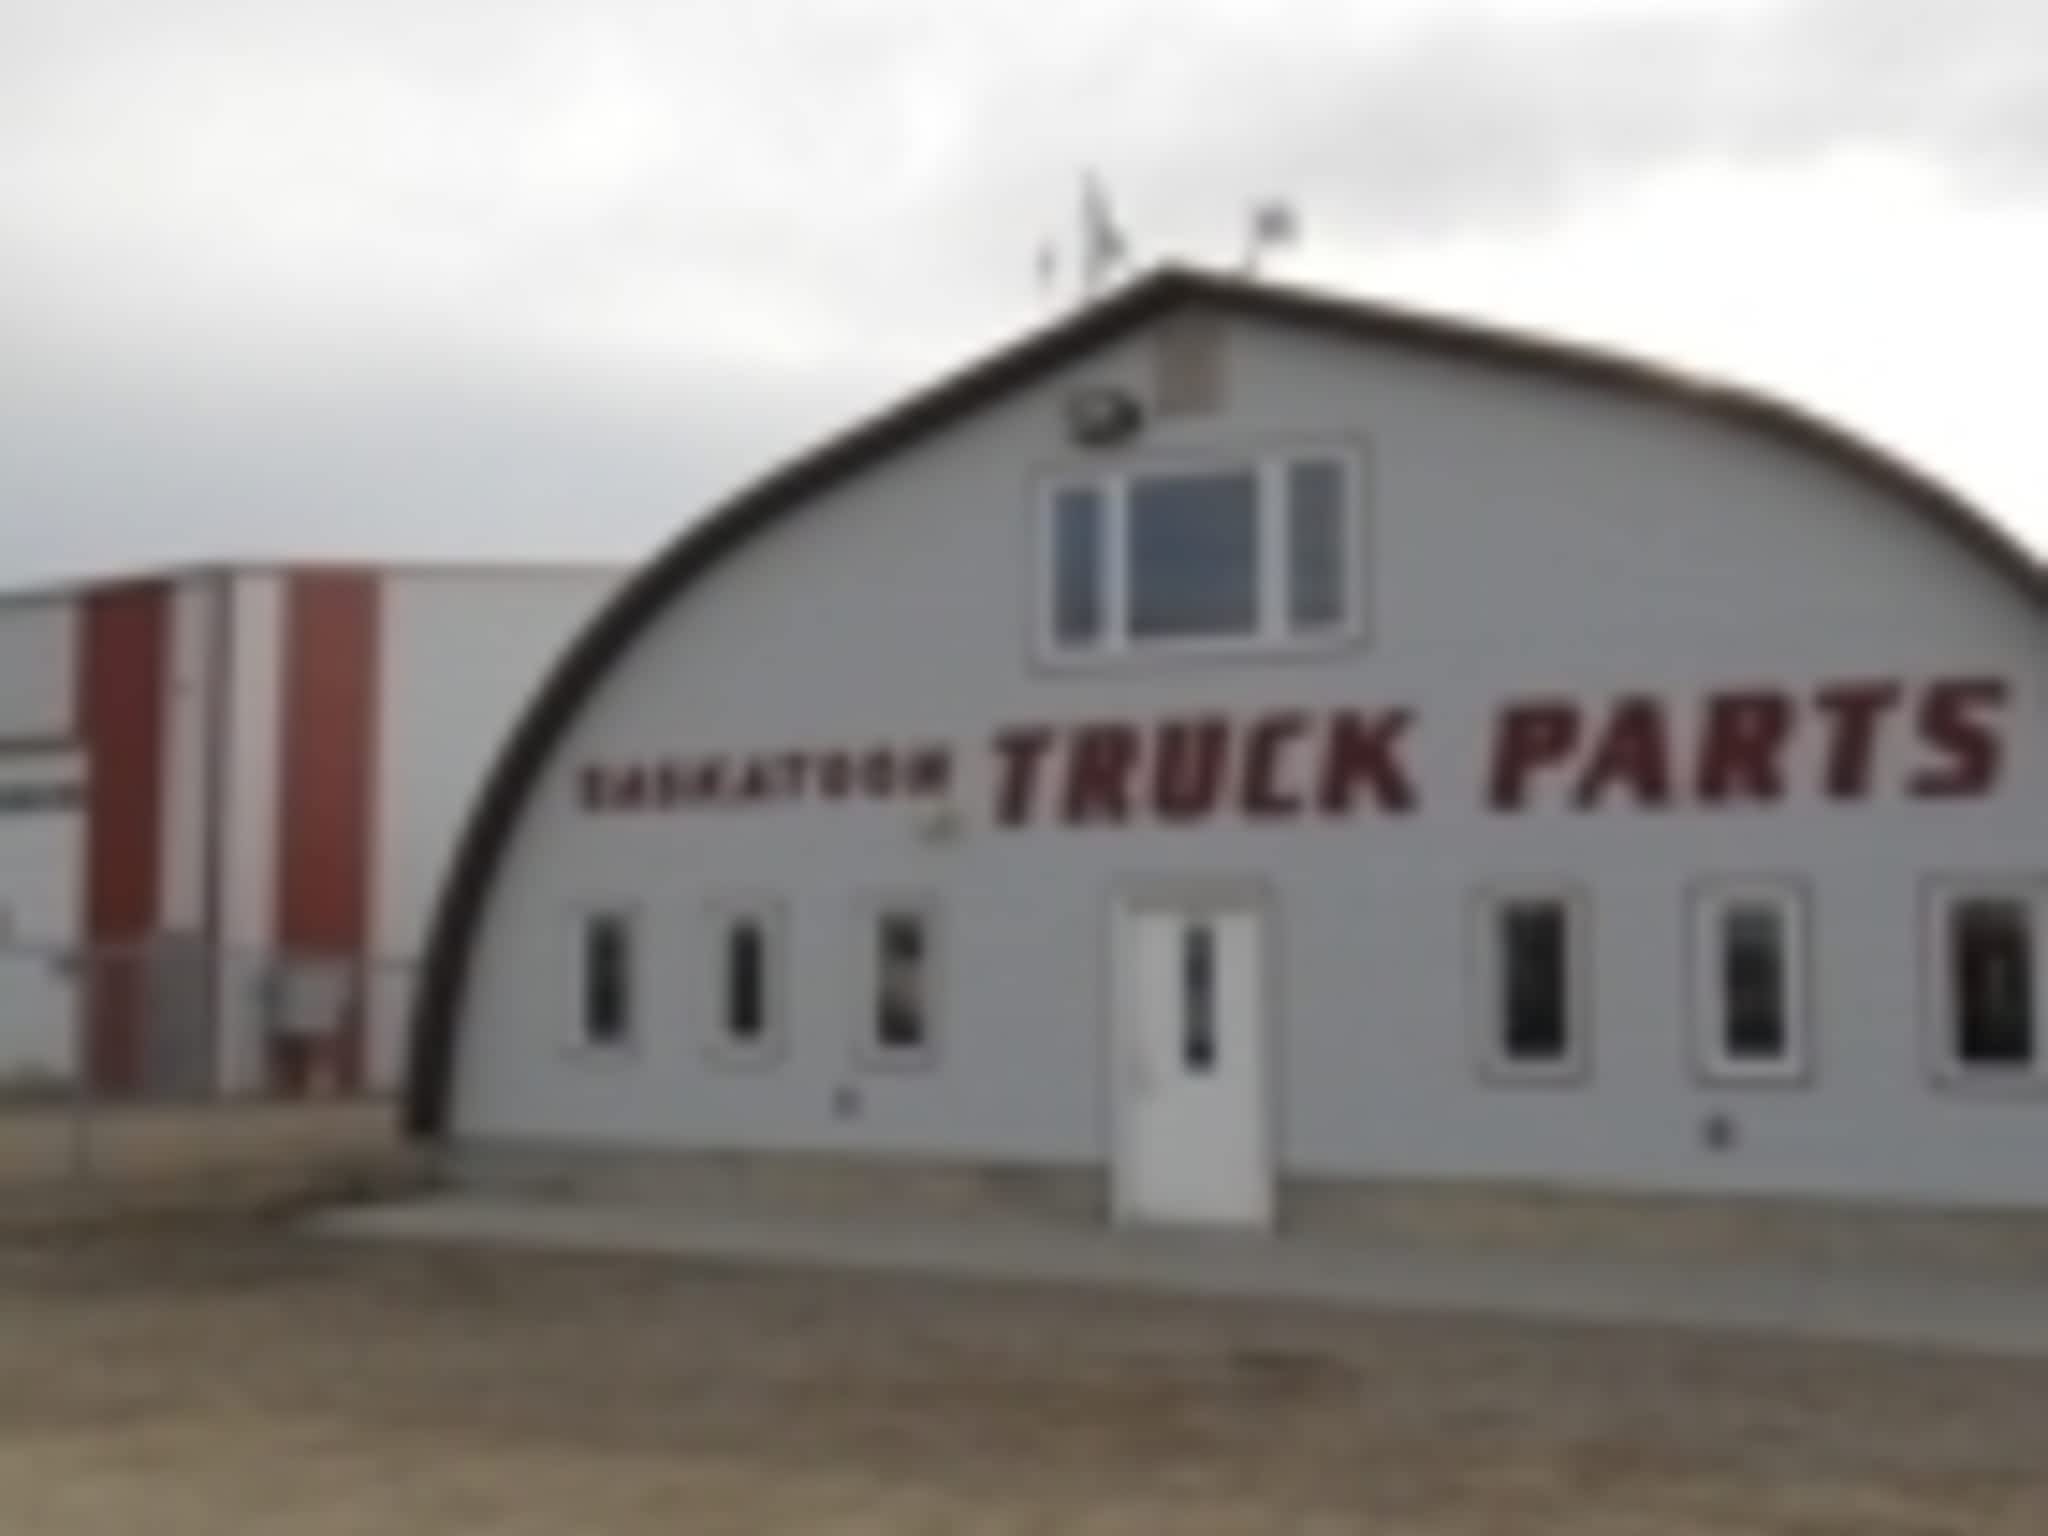 photo Saskatoon Truck Parts Centre